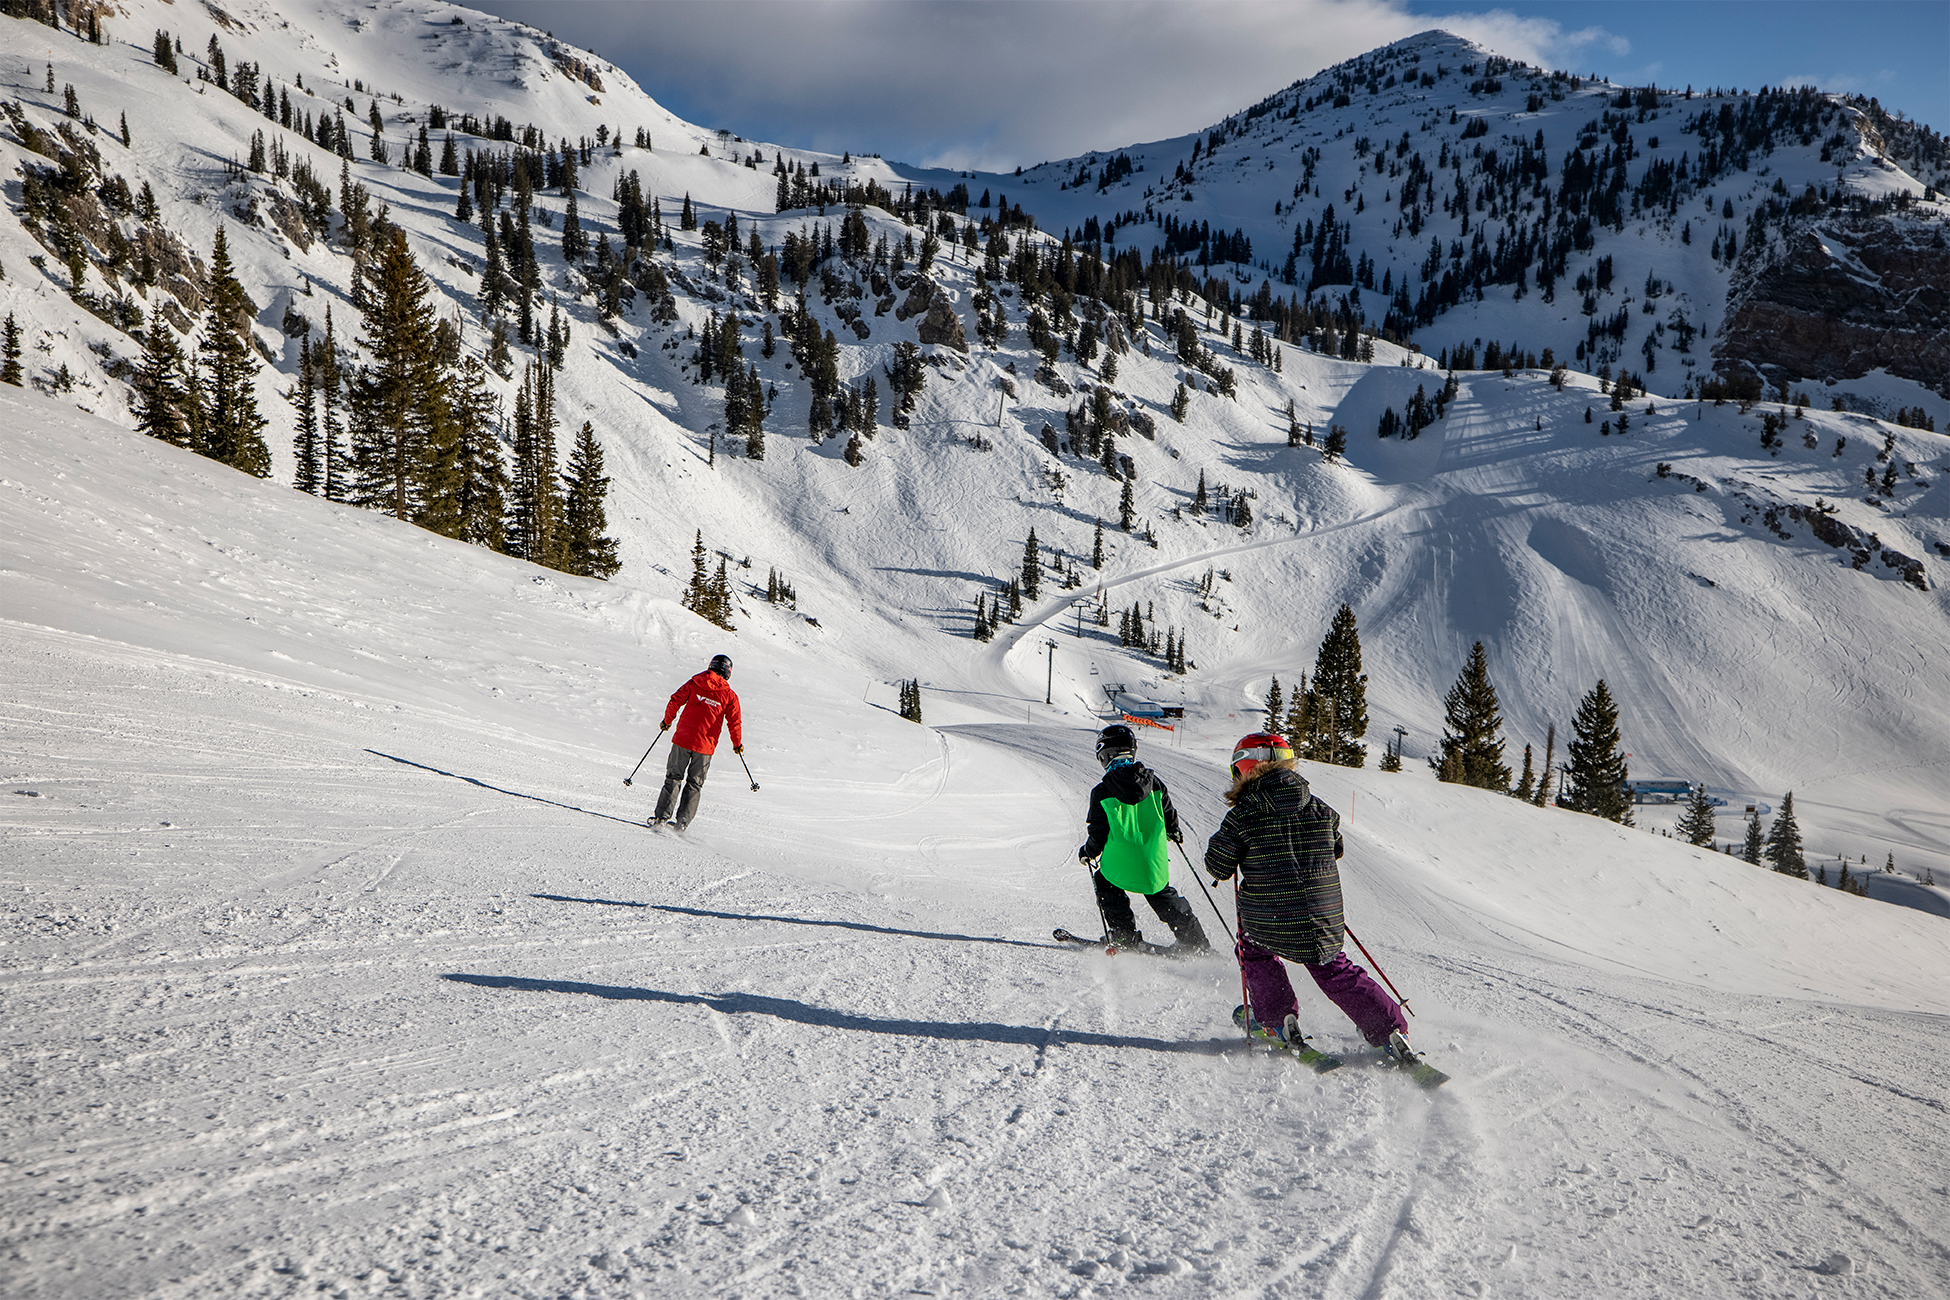 Youth Ski Camps & ski clinics at Snowbird